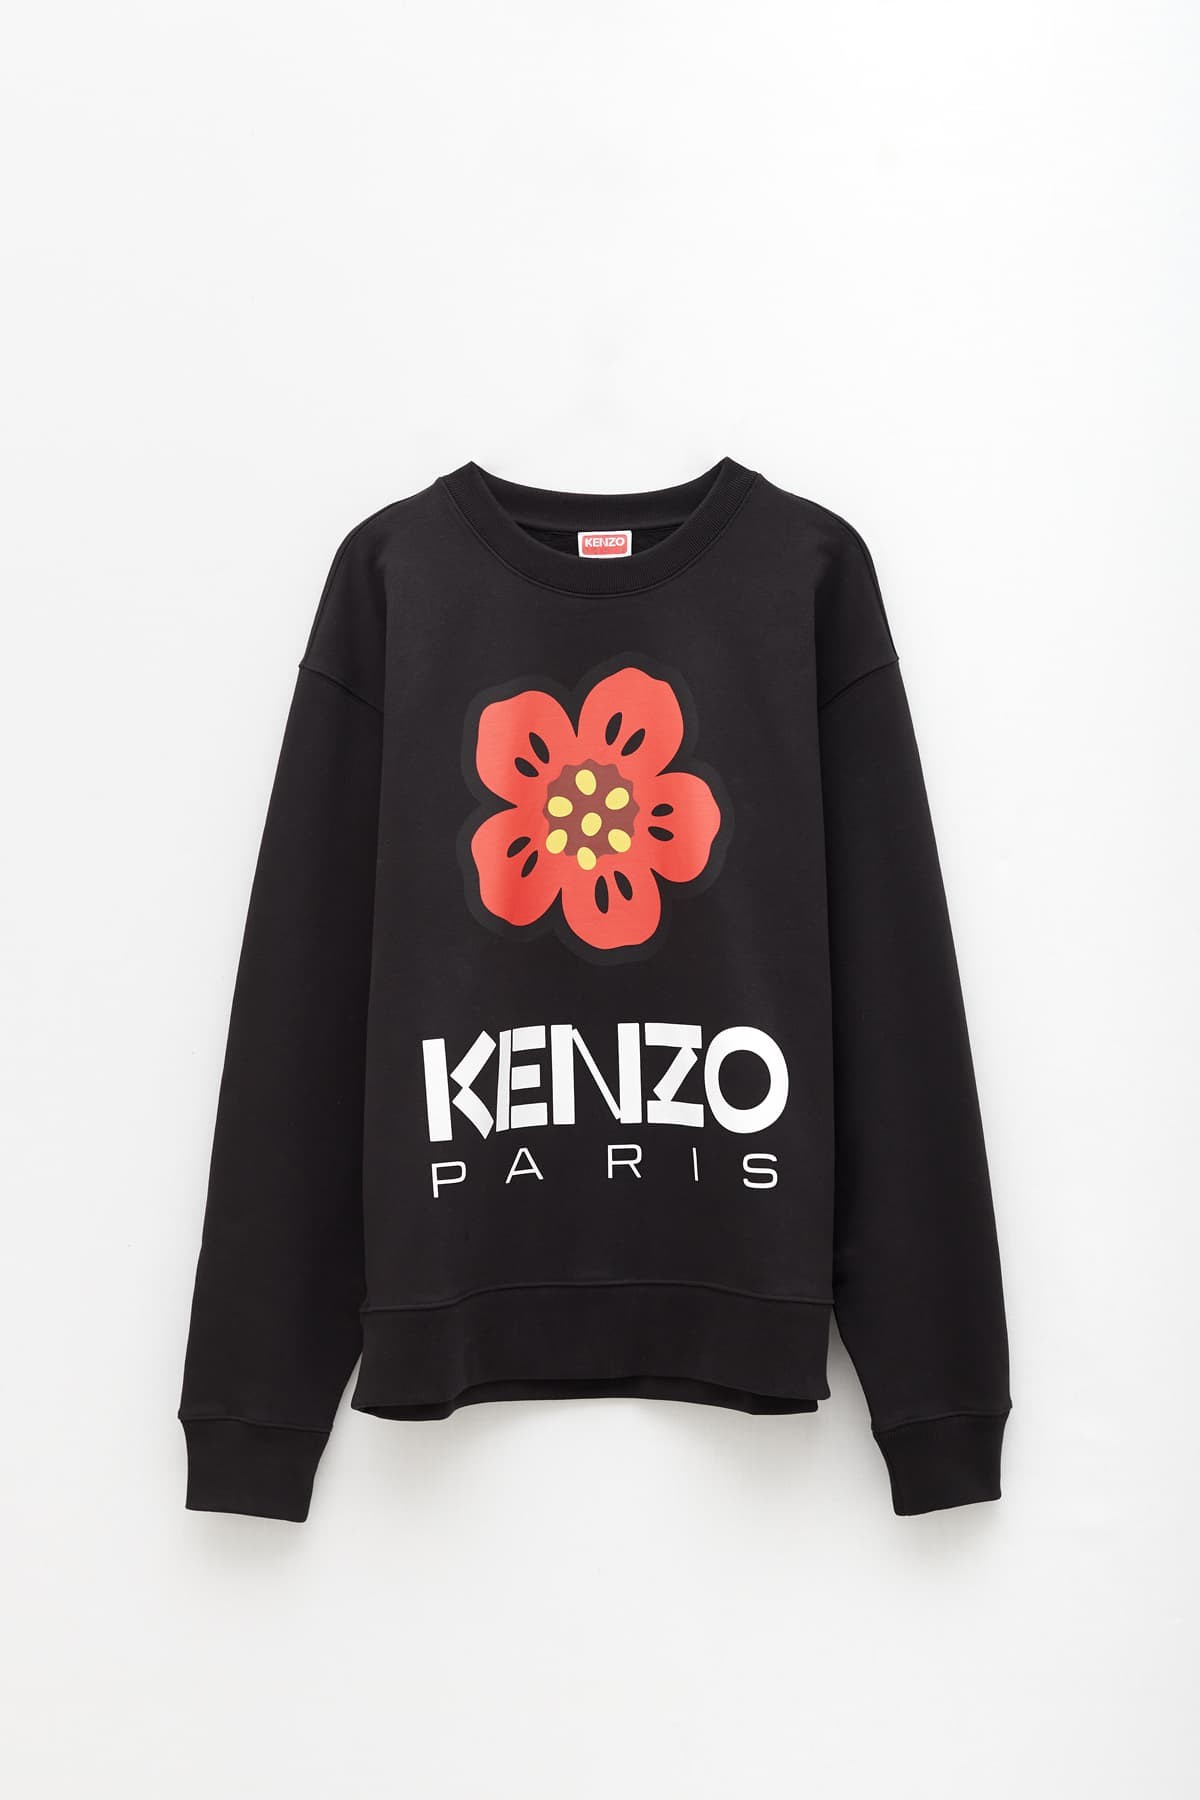 KENZO BLACK BOKE FLOWER SWEATSHIRT IAMNUE